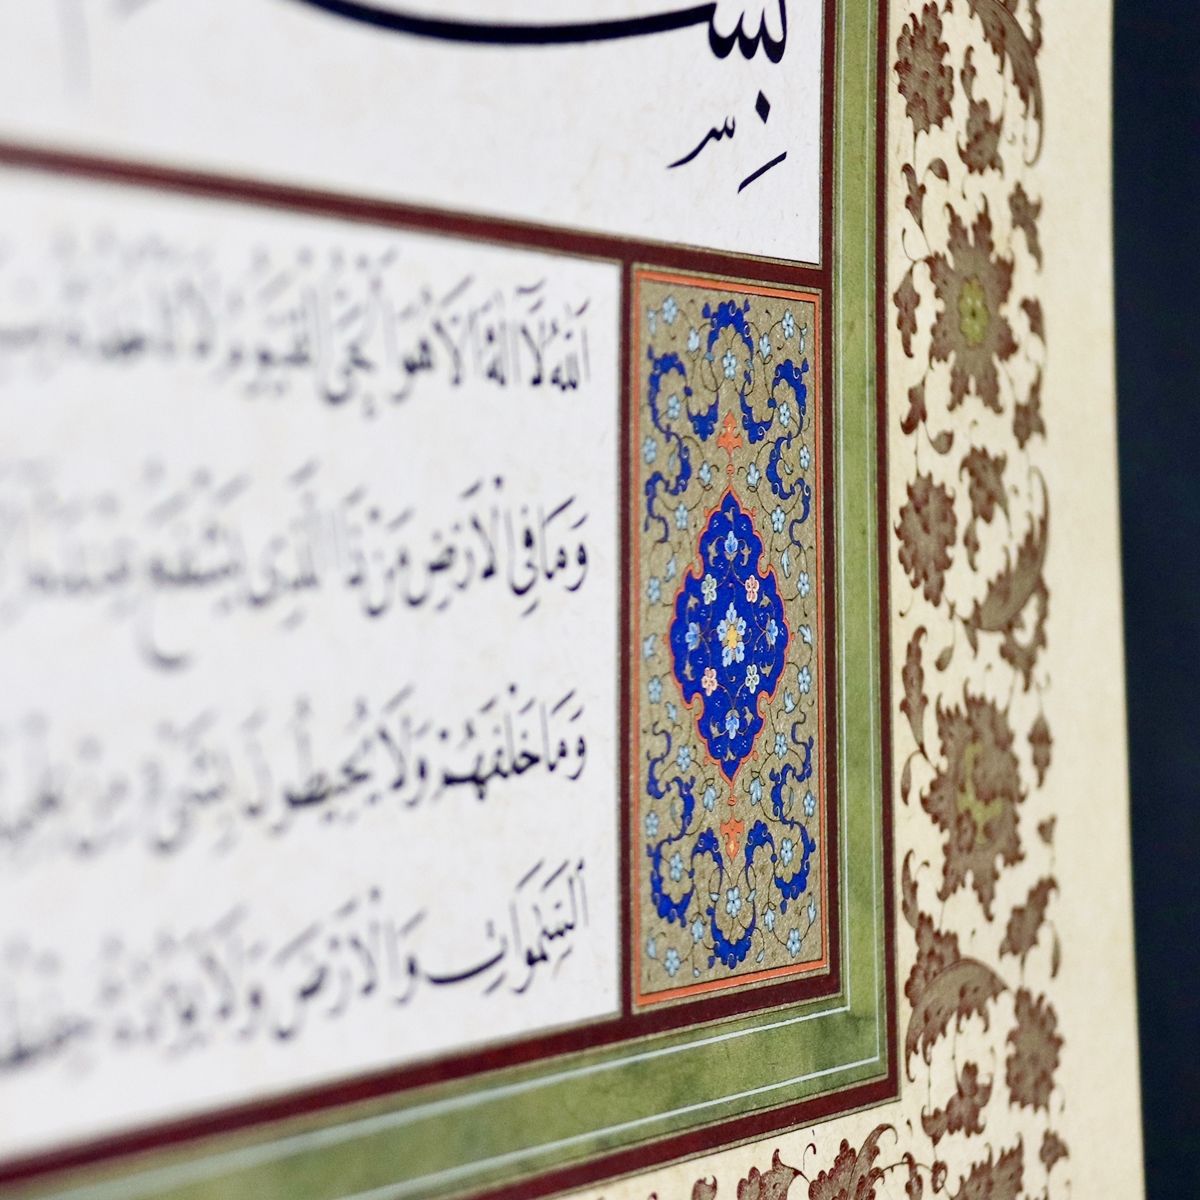 Ayatul Kursi: Calligraphy Panel in Jali Thuluth and Naskh Scripts - Precision Print